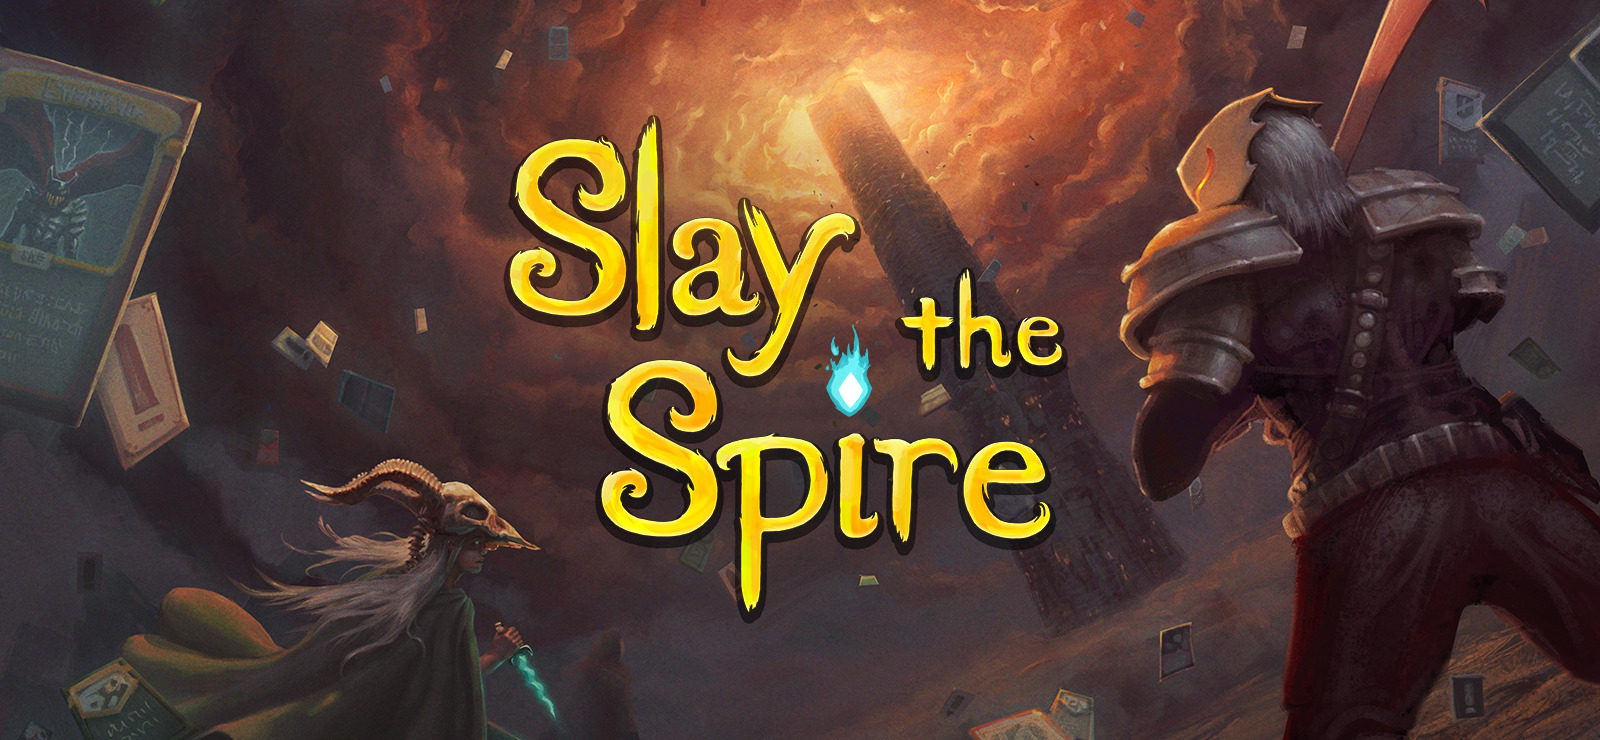 Slay the Spire on GOG.com